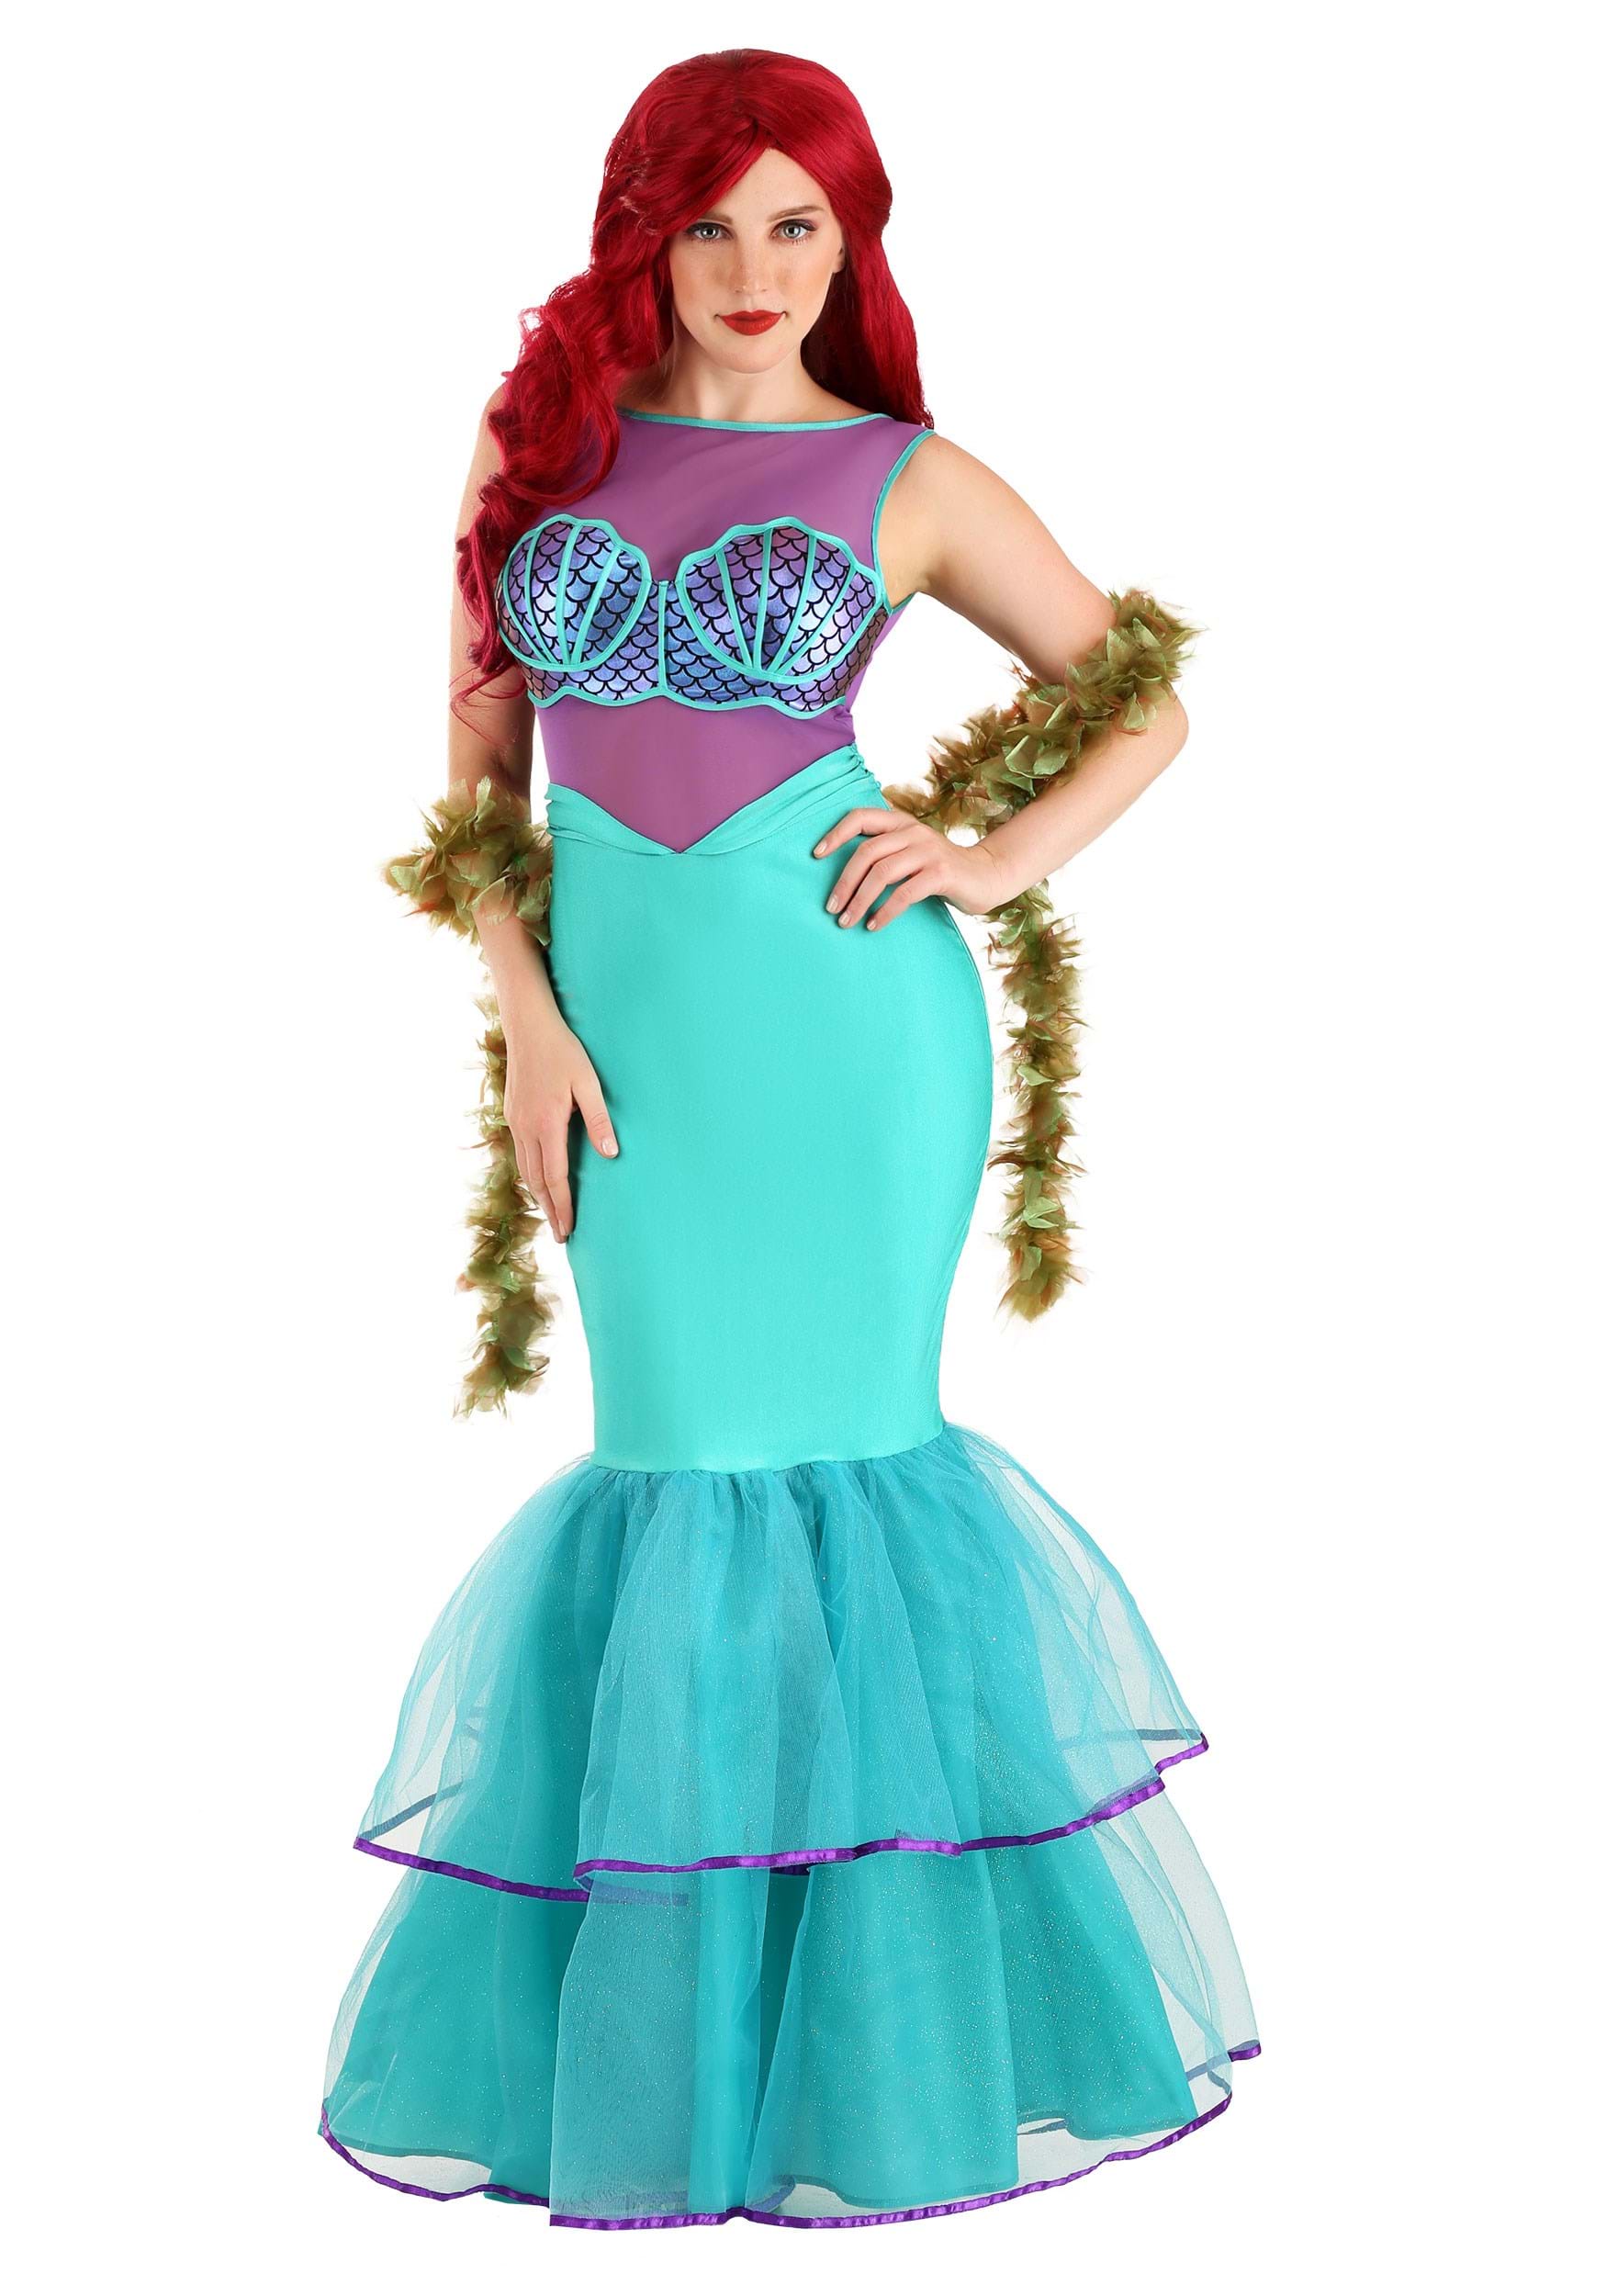 Photos - Fancy Dress FUN Costumes Shell-a-brate Women's Mermaid Costume Purple/Green